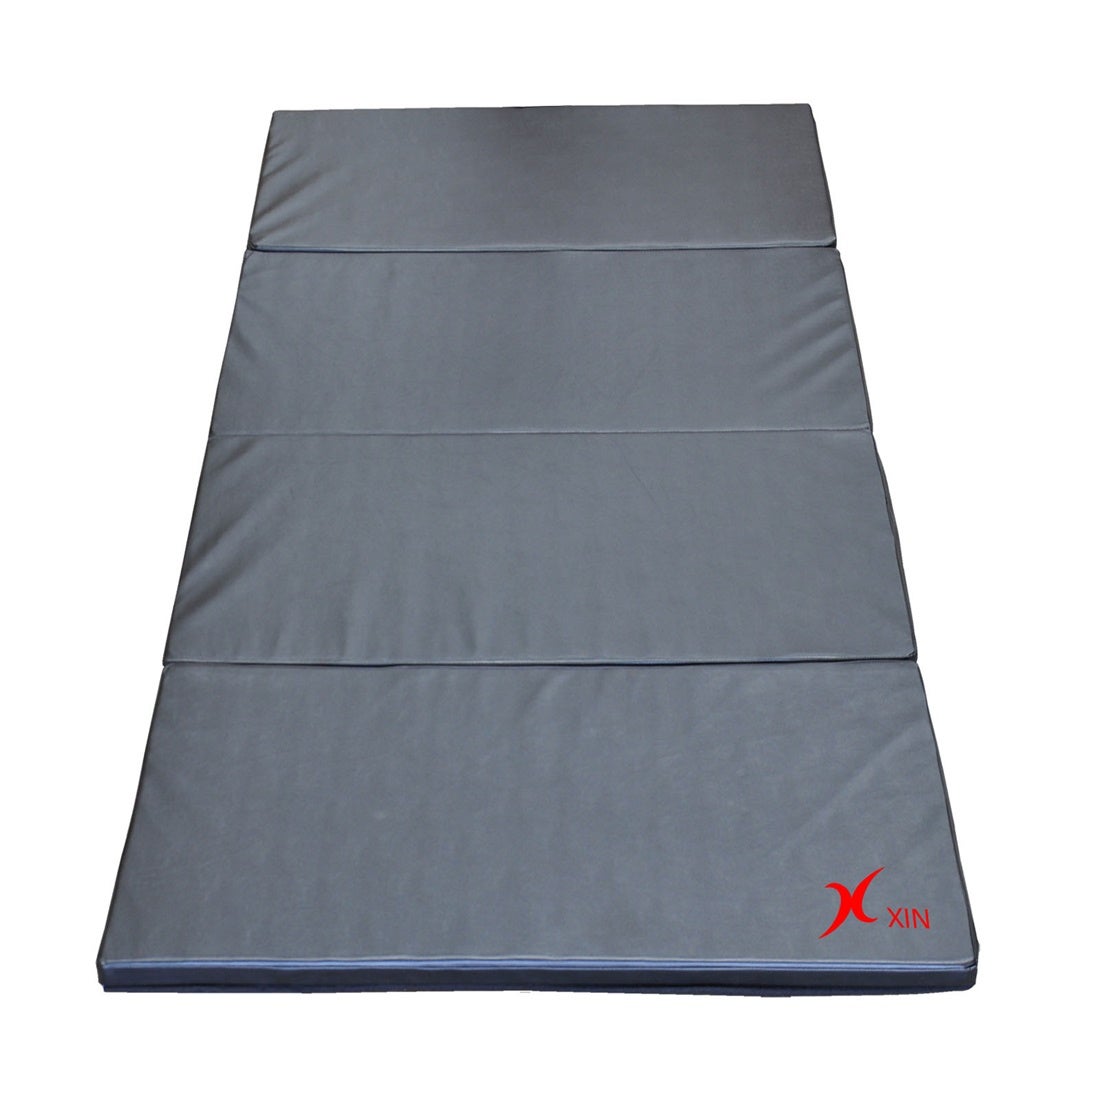 Super Large 300cm X 120cm X 5cm Gymnastics Folding Gym Exercise Yoga Mat - Black